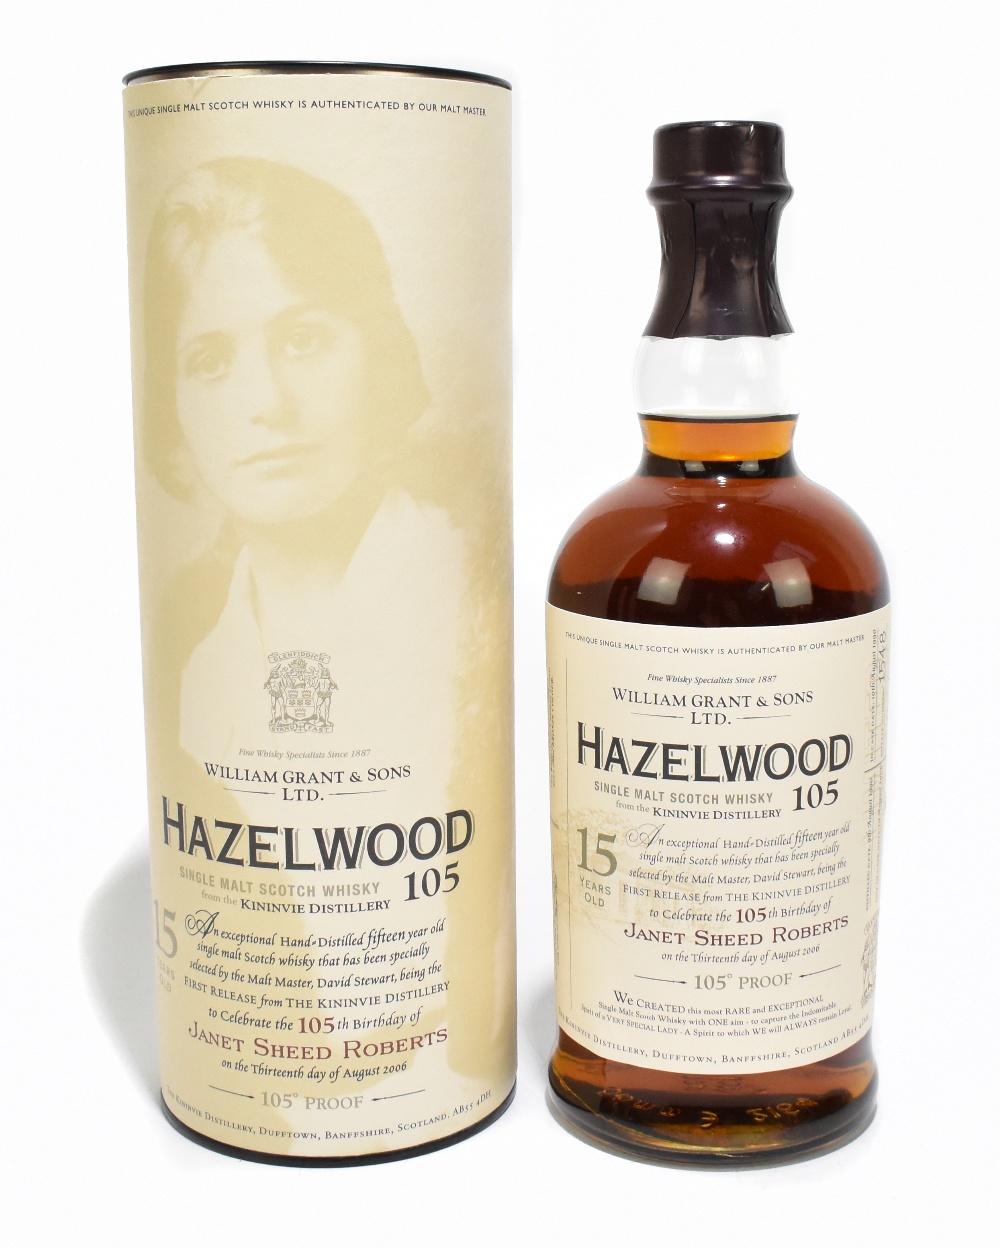 WHISKY; a single bottle of Hazelwood Single Malt Scotch Whisky, 105th birthday of Janet Sheed